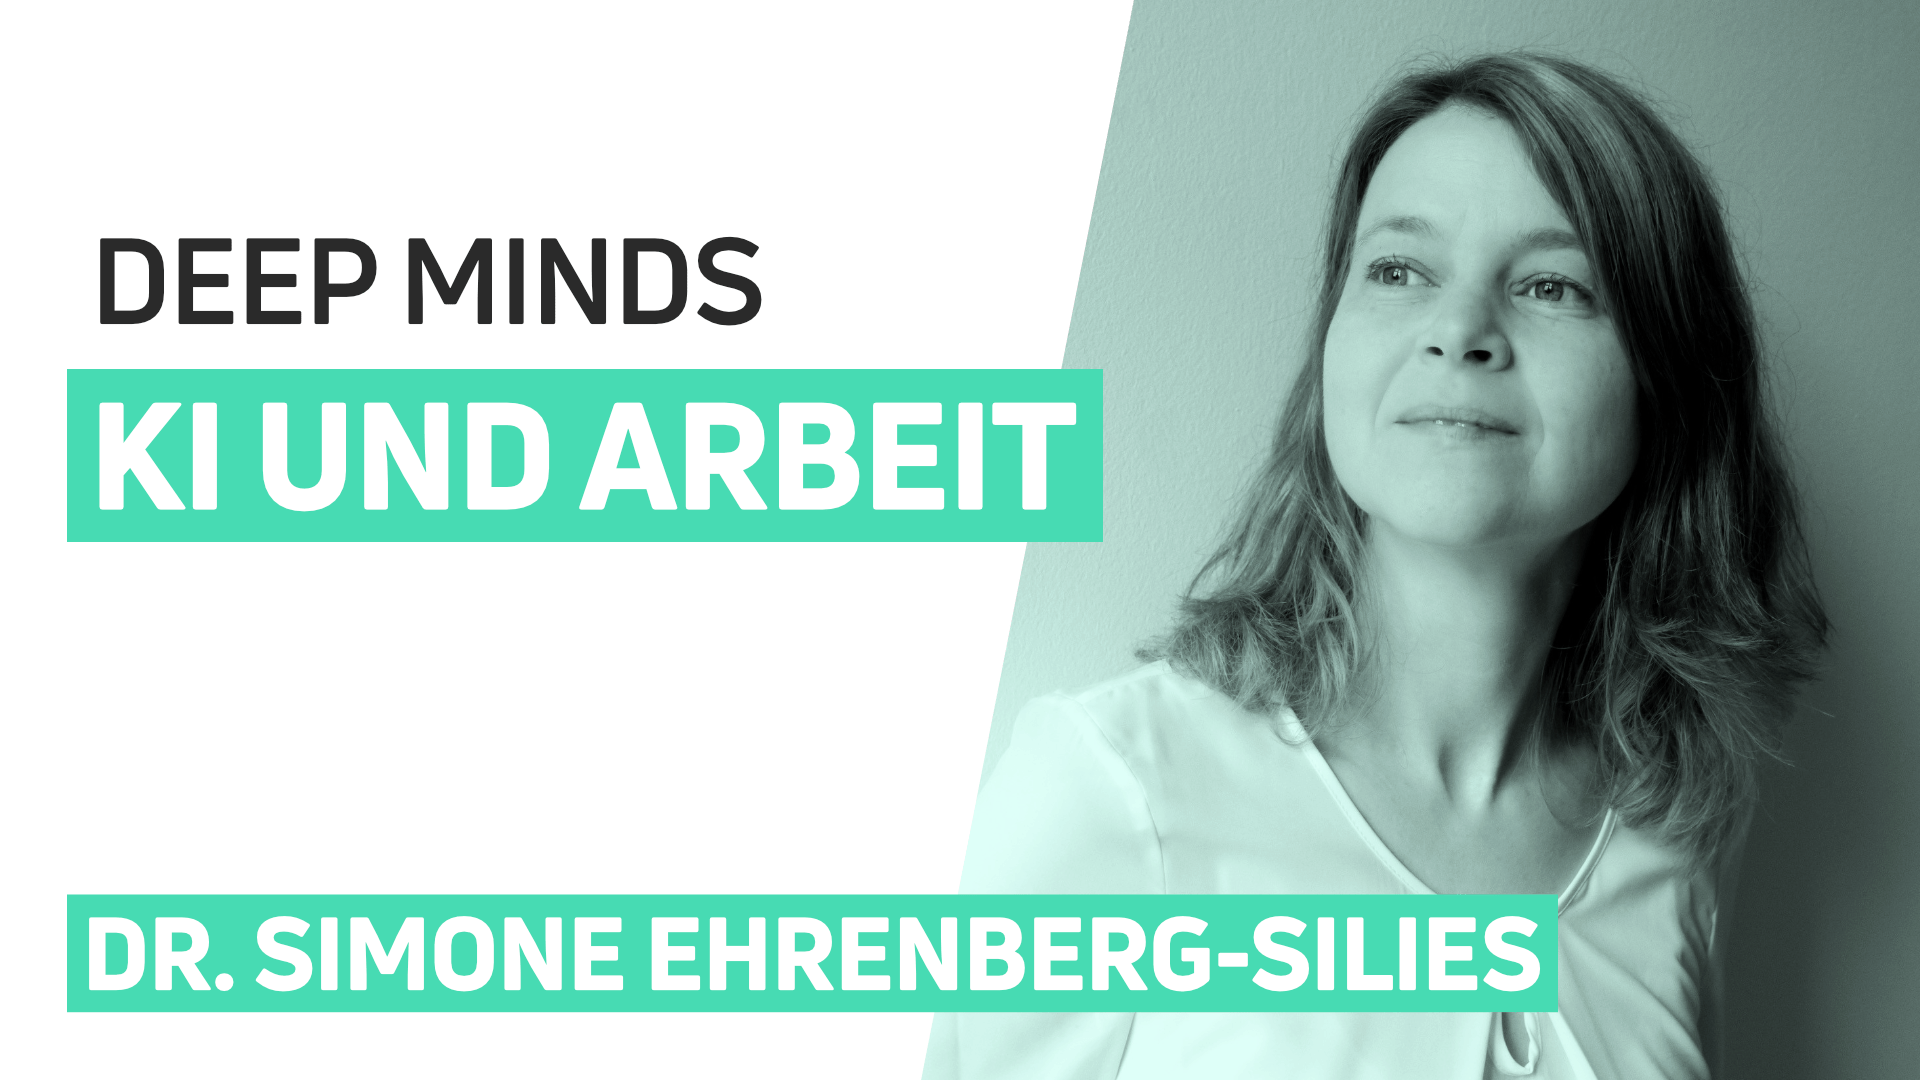 DEEP MINDS #2 - Dr. Simone Ehrenberg-Silies - KI und Arbeit